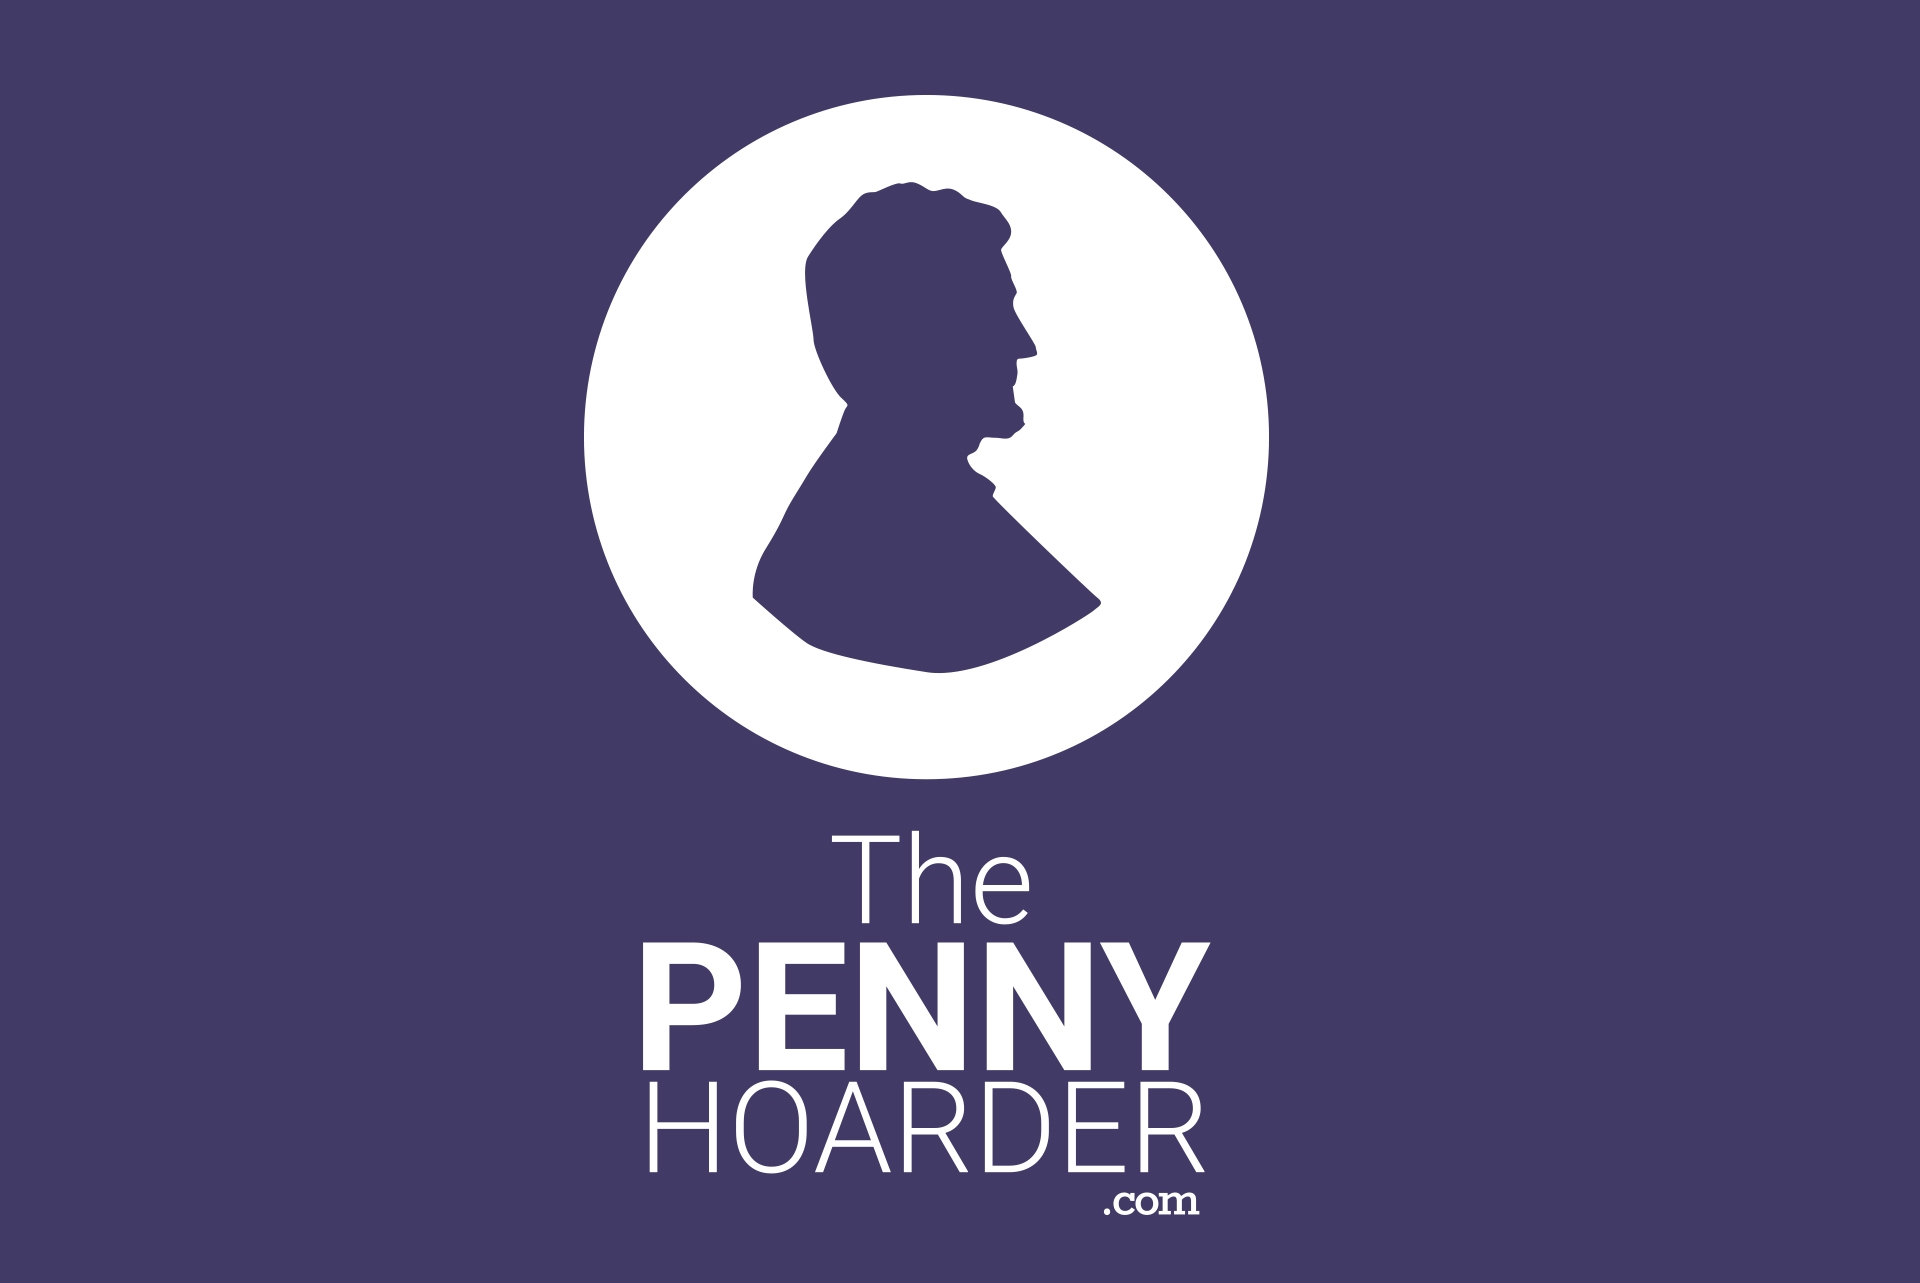 The Penny Hoarder logo